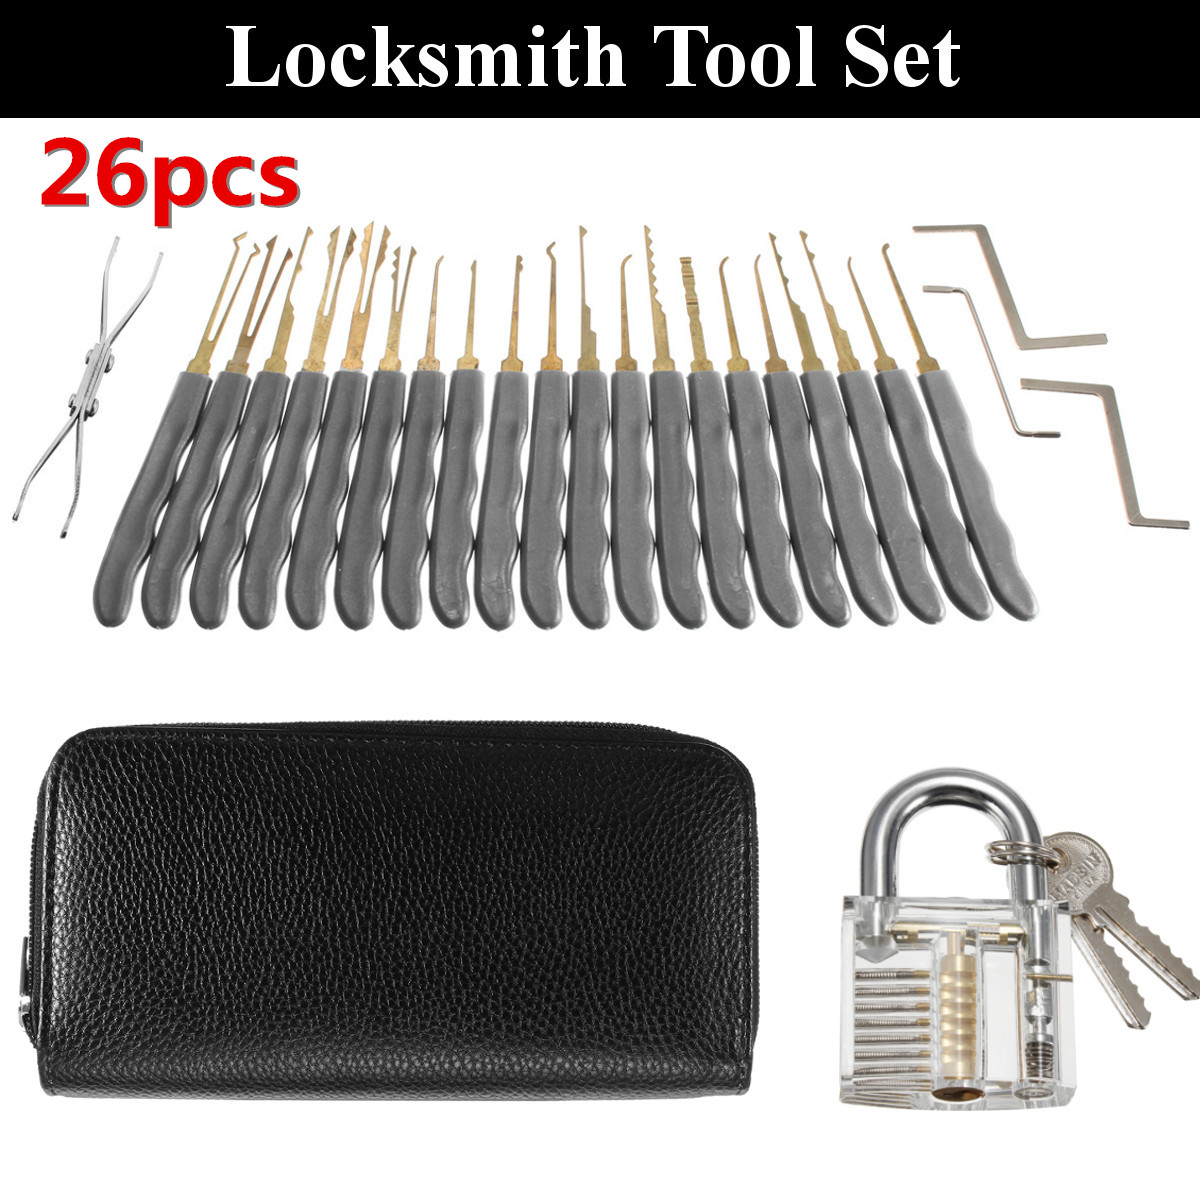 DANIU-26Pcs-Padlock-Locksmith-Training-Starter-Practice-Kit-Lock-Unlocking-Pick-Tool-1202650-1